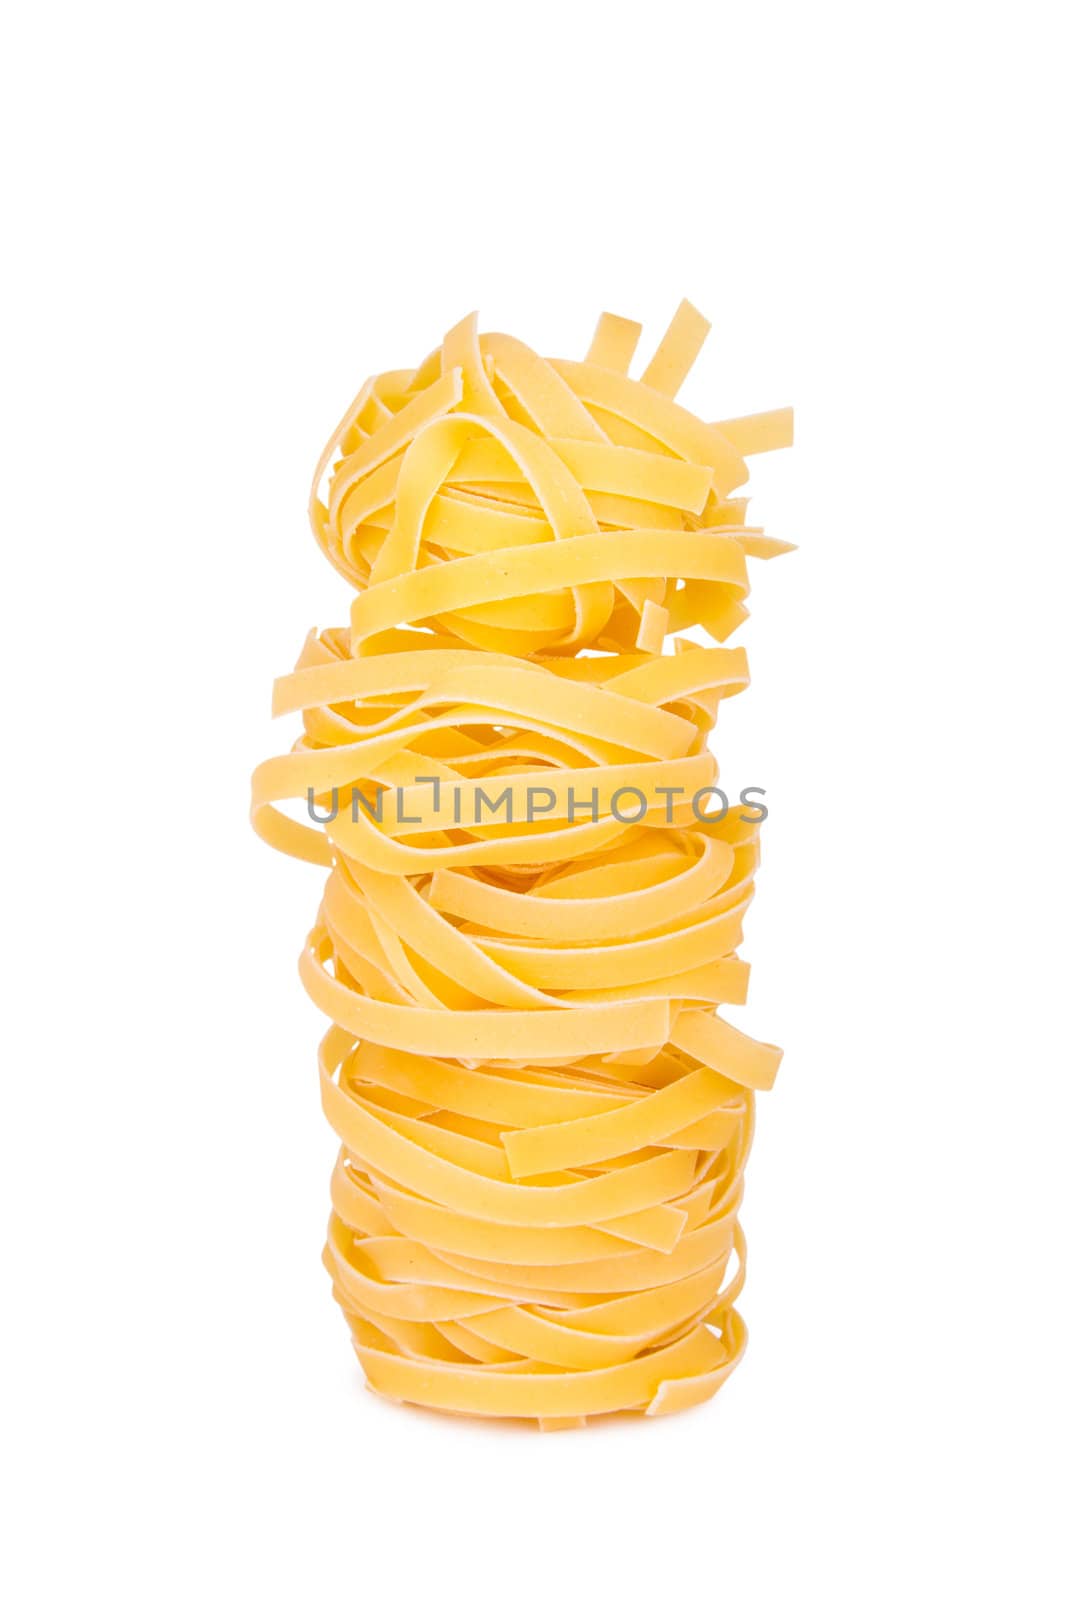 Italian pasta: tagliatelle, isolated on white background